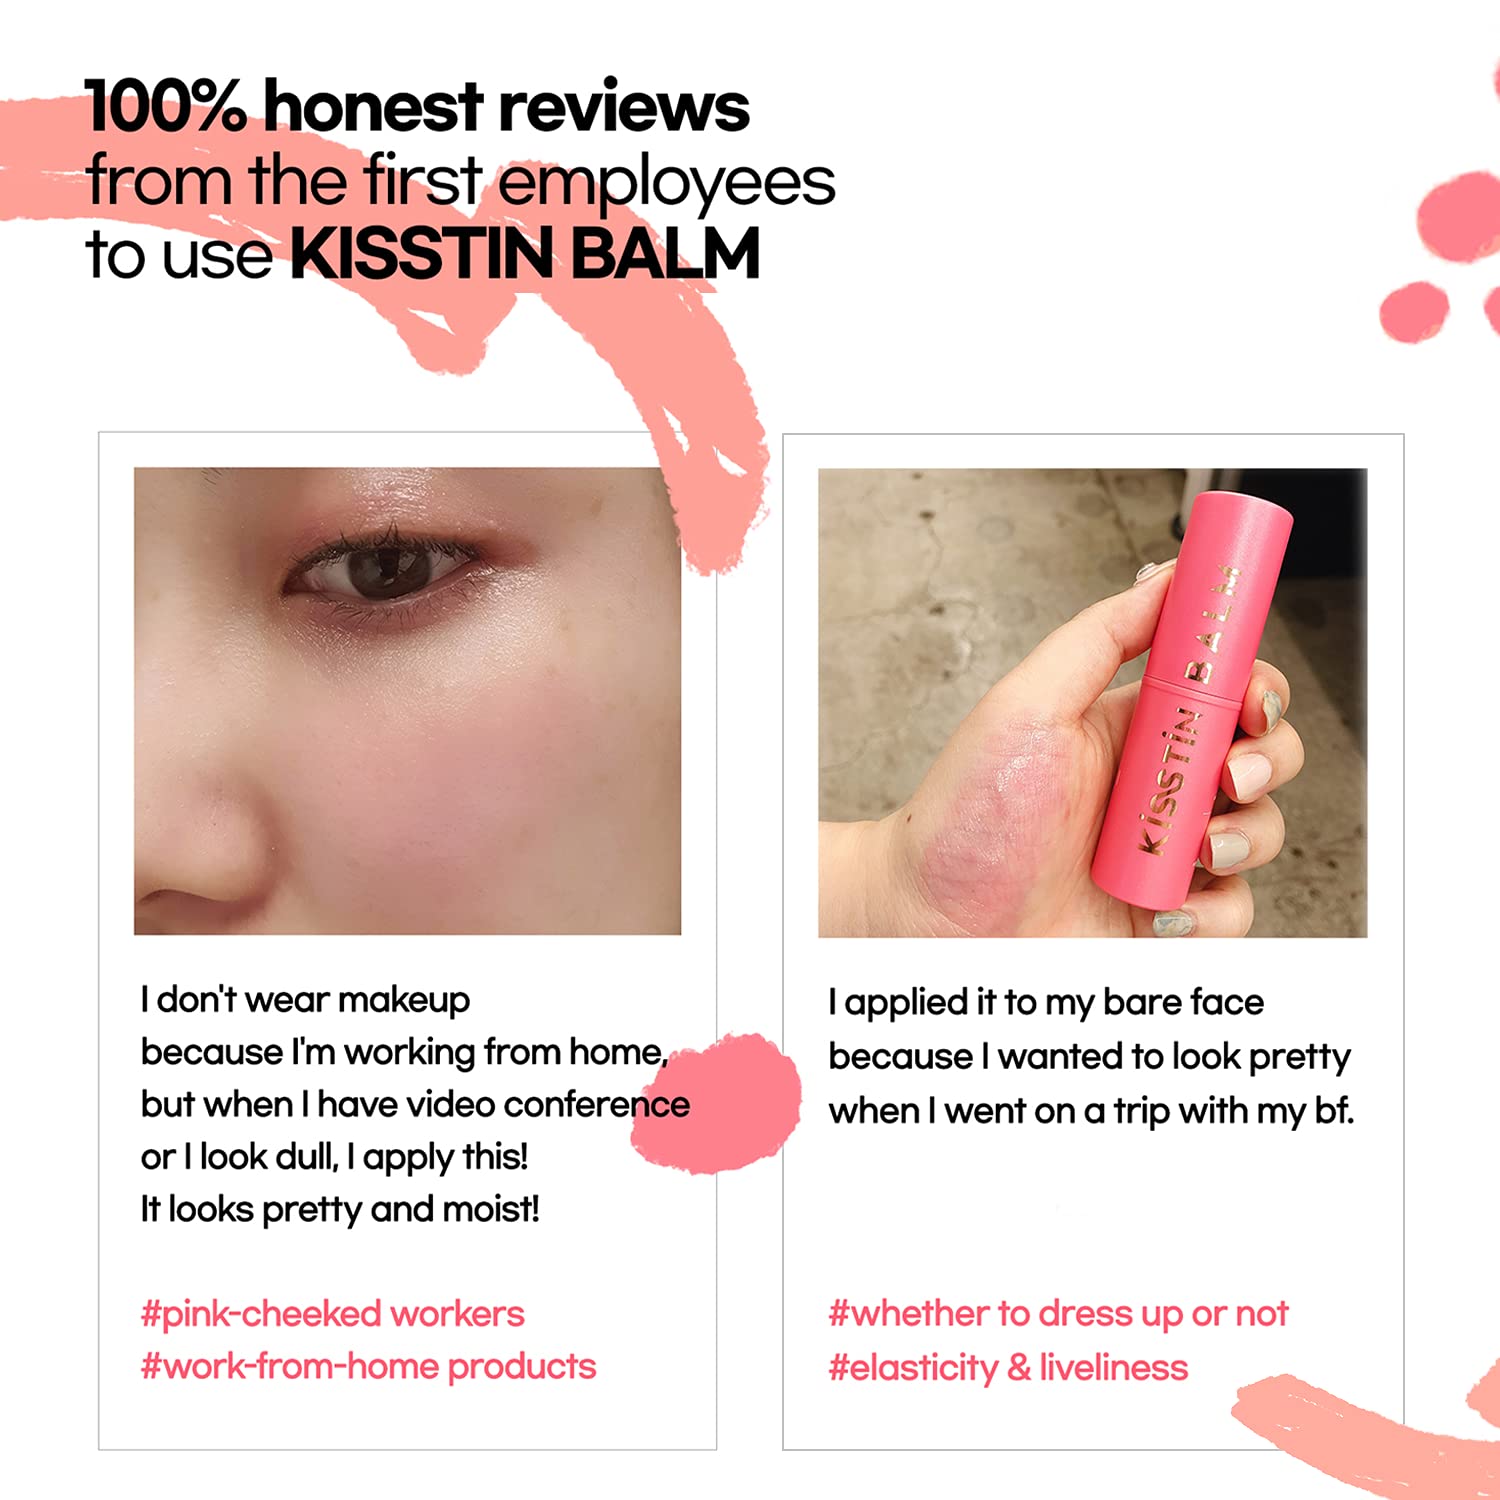 [ Kahi ] Seoul Kisstin Balm Pink, 3-in-1 Moisturizer for Lips, Eyes, and Cheeks, 9g / 0.32 oz